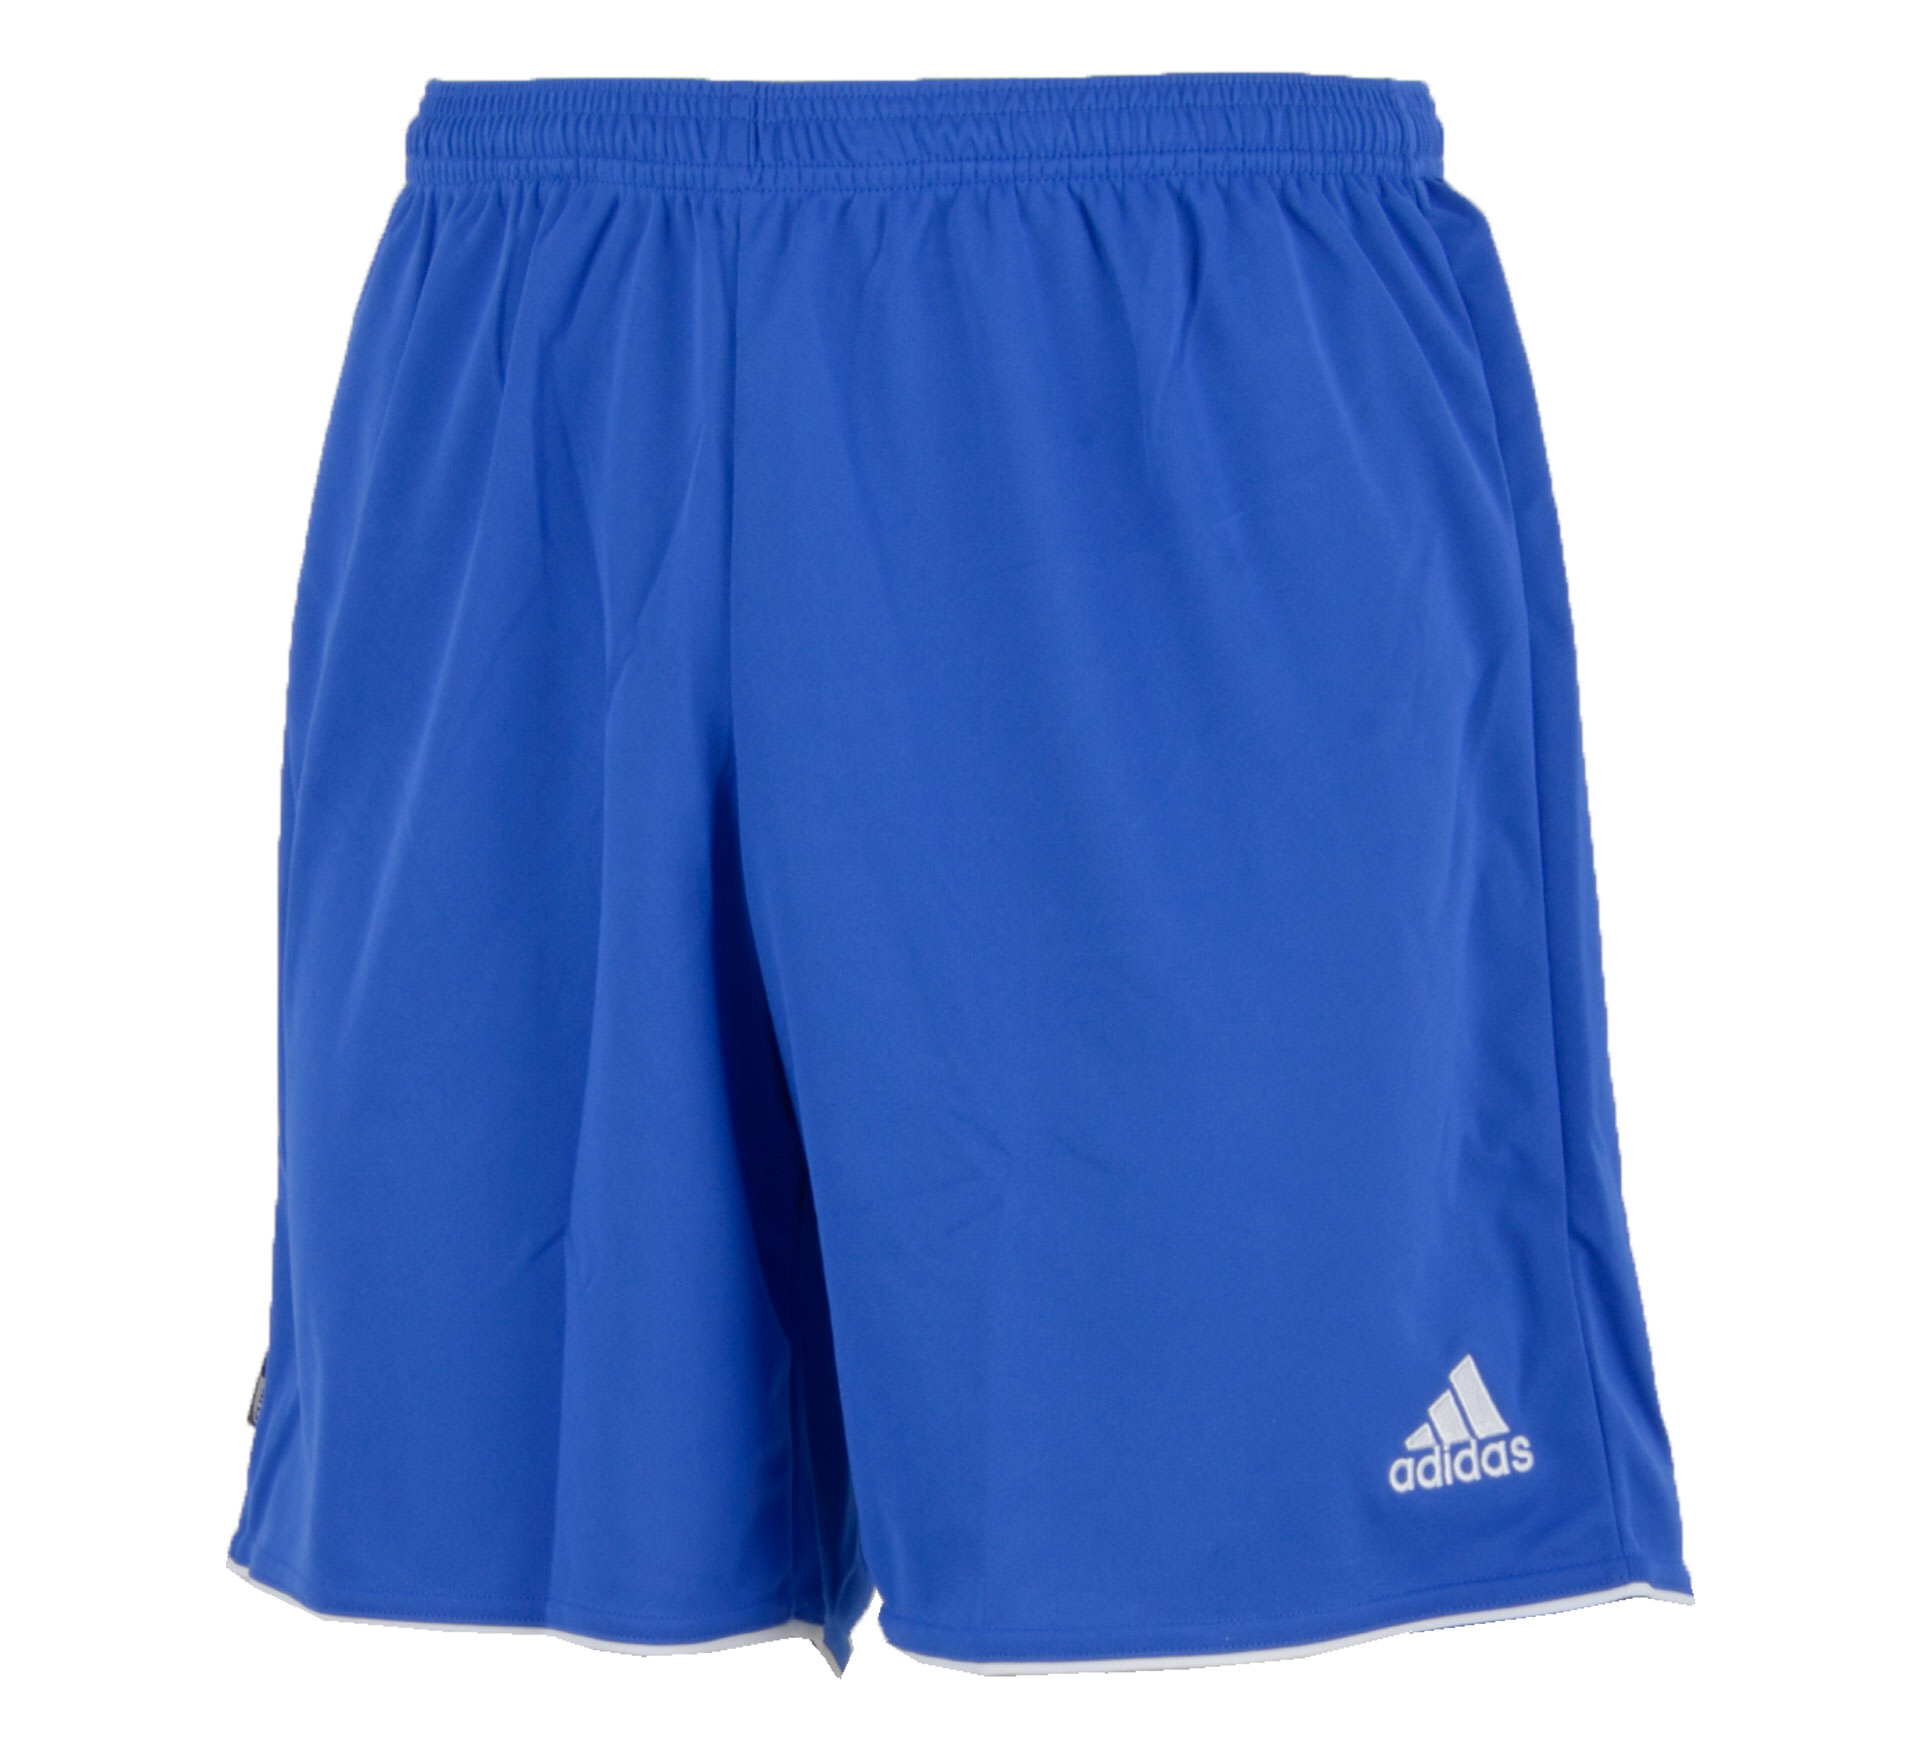 Adidas Parma II Shorts (Blue) - The Football Factory